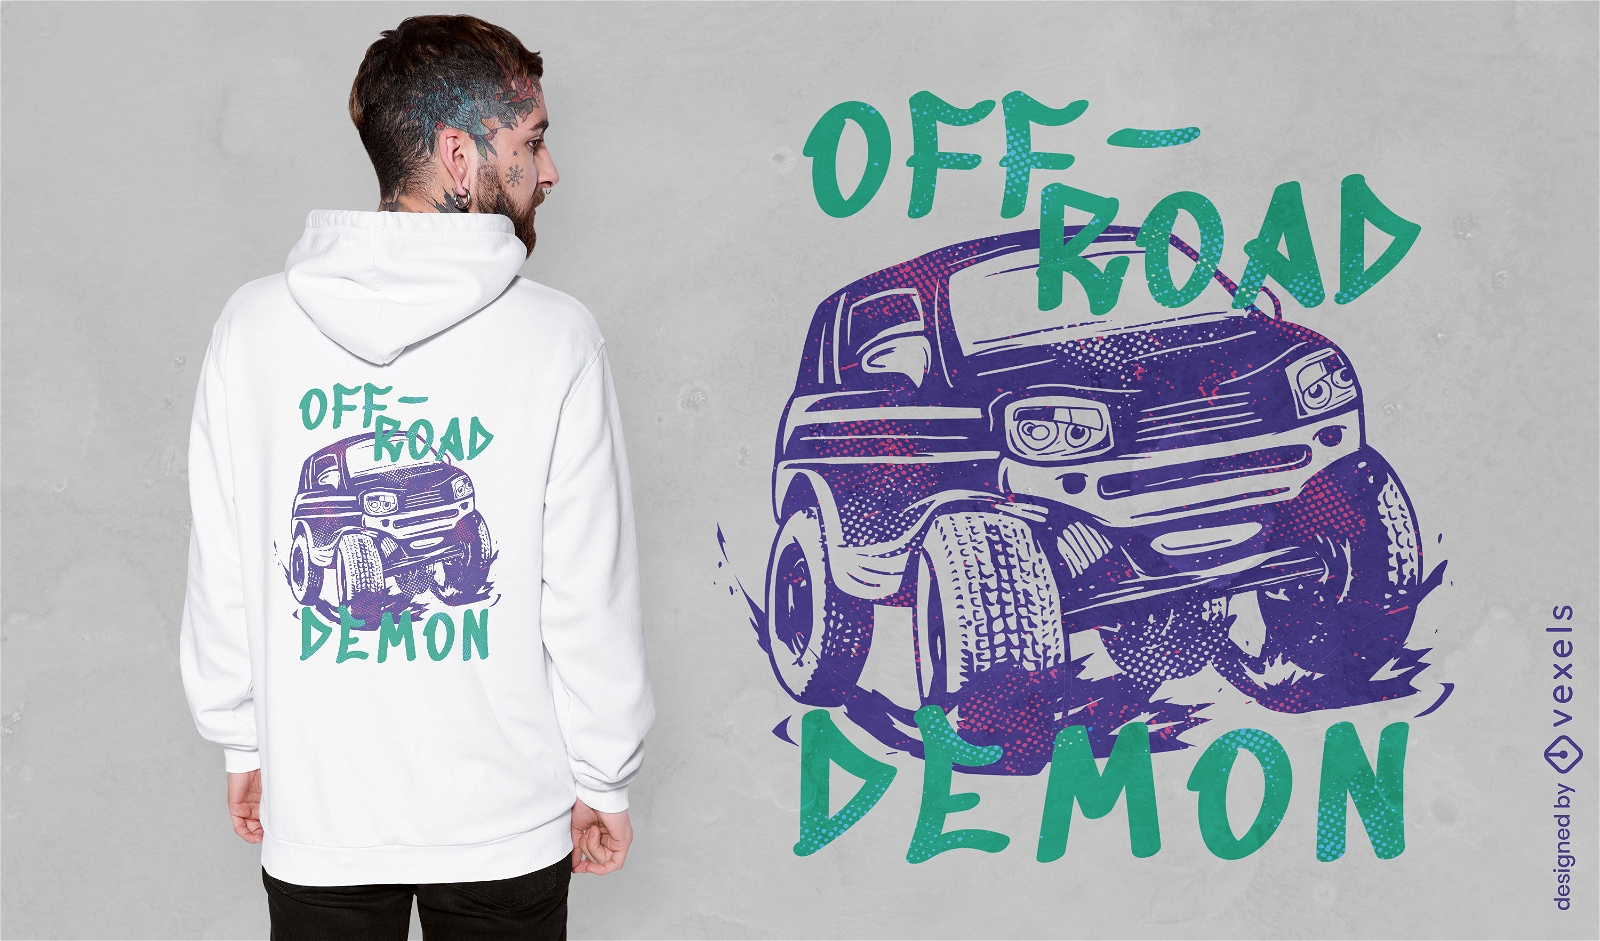 Off road demon car t-shirt design